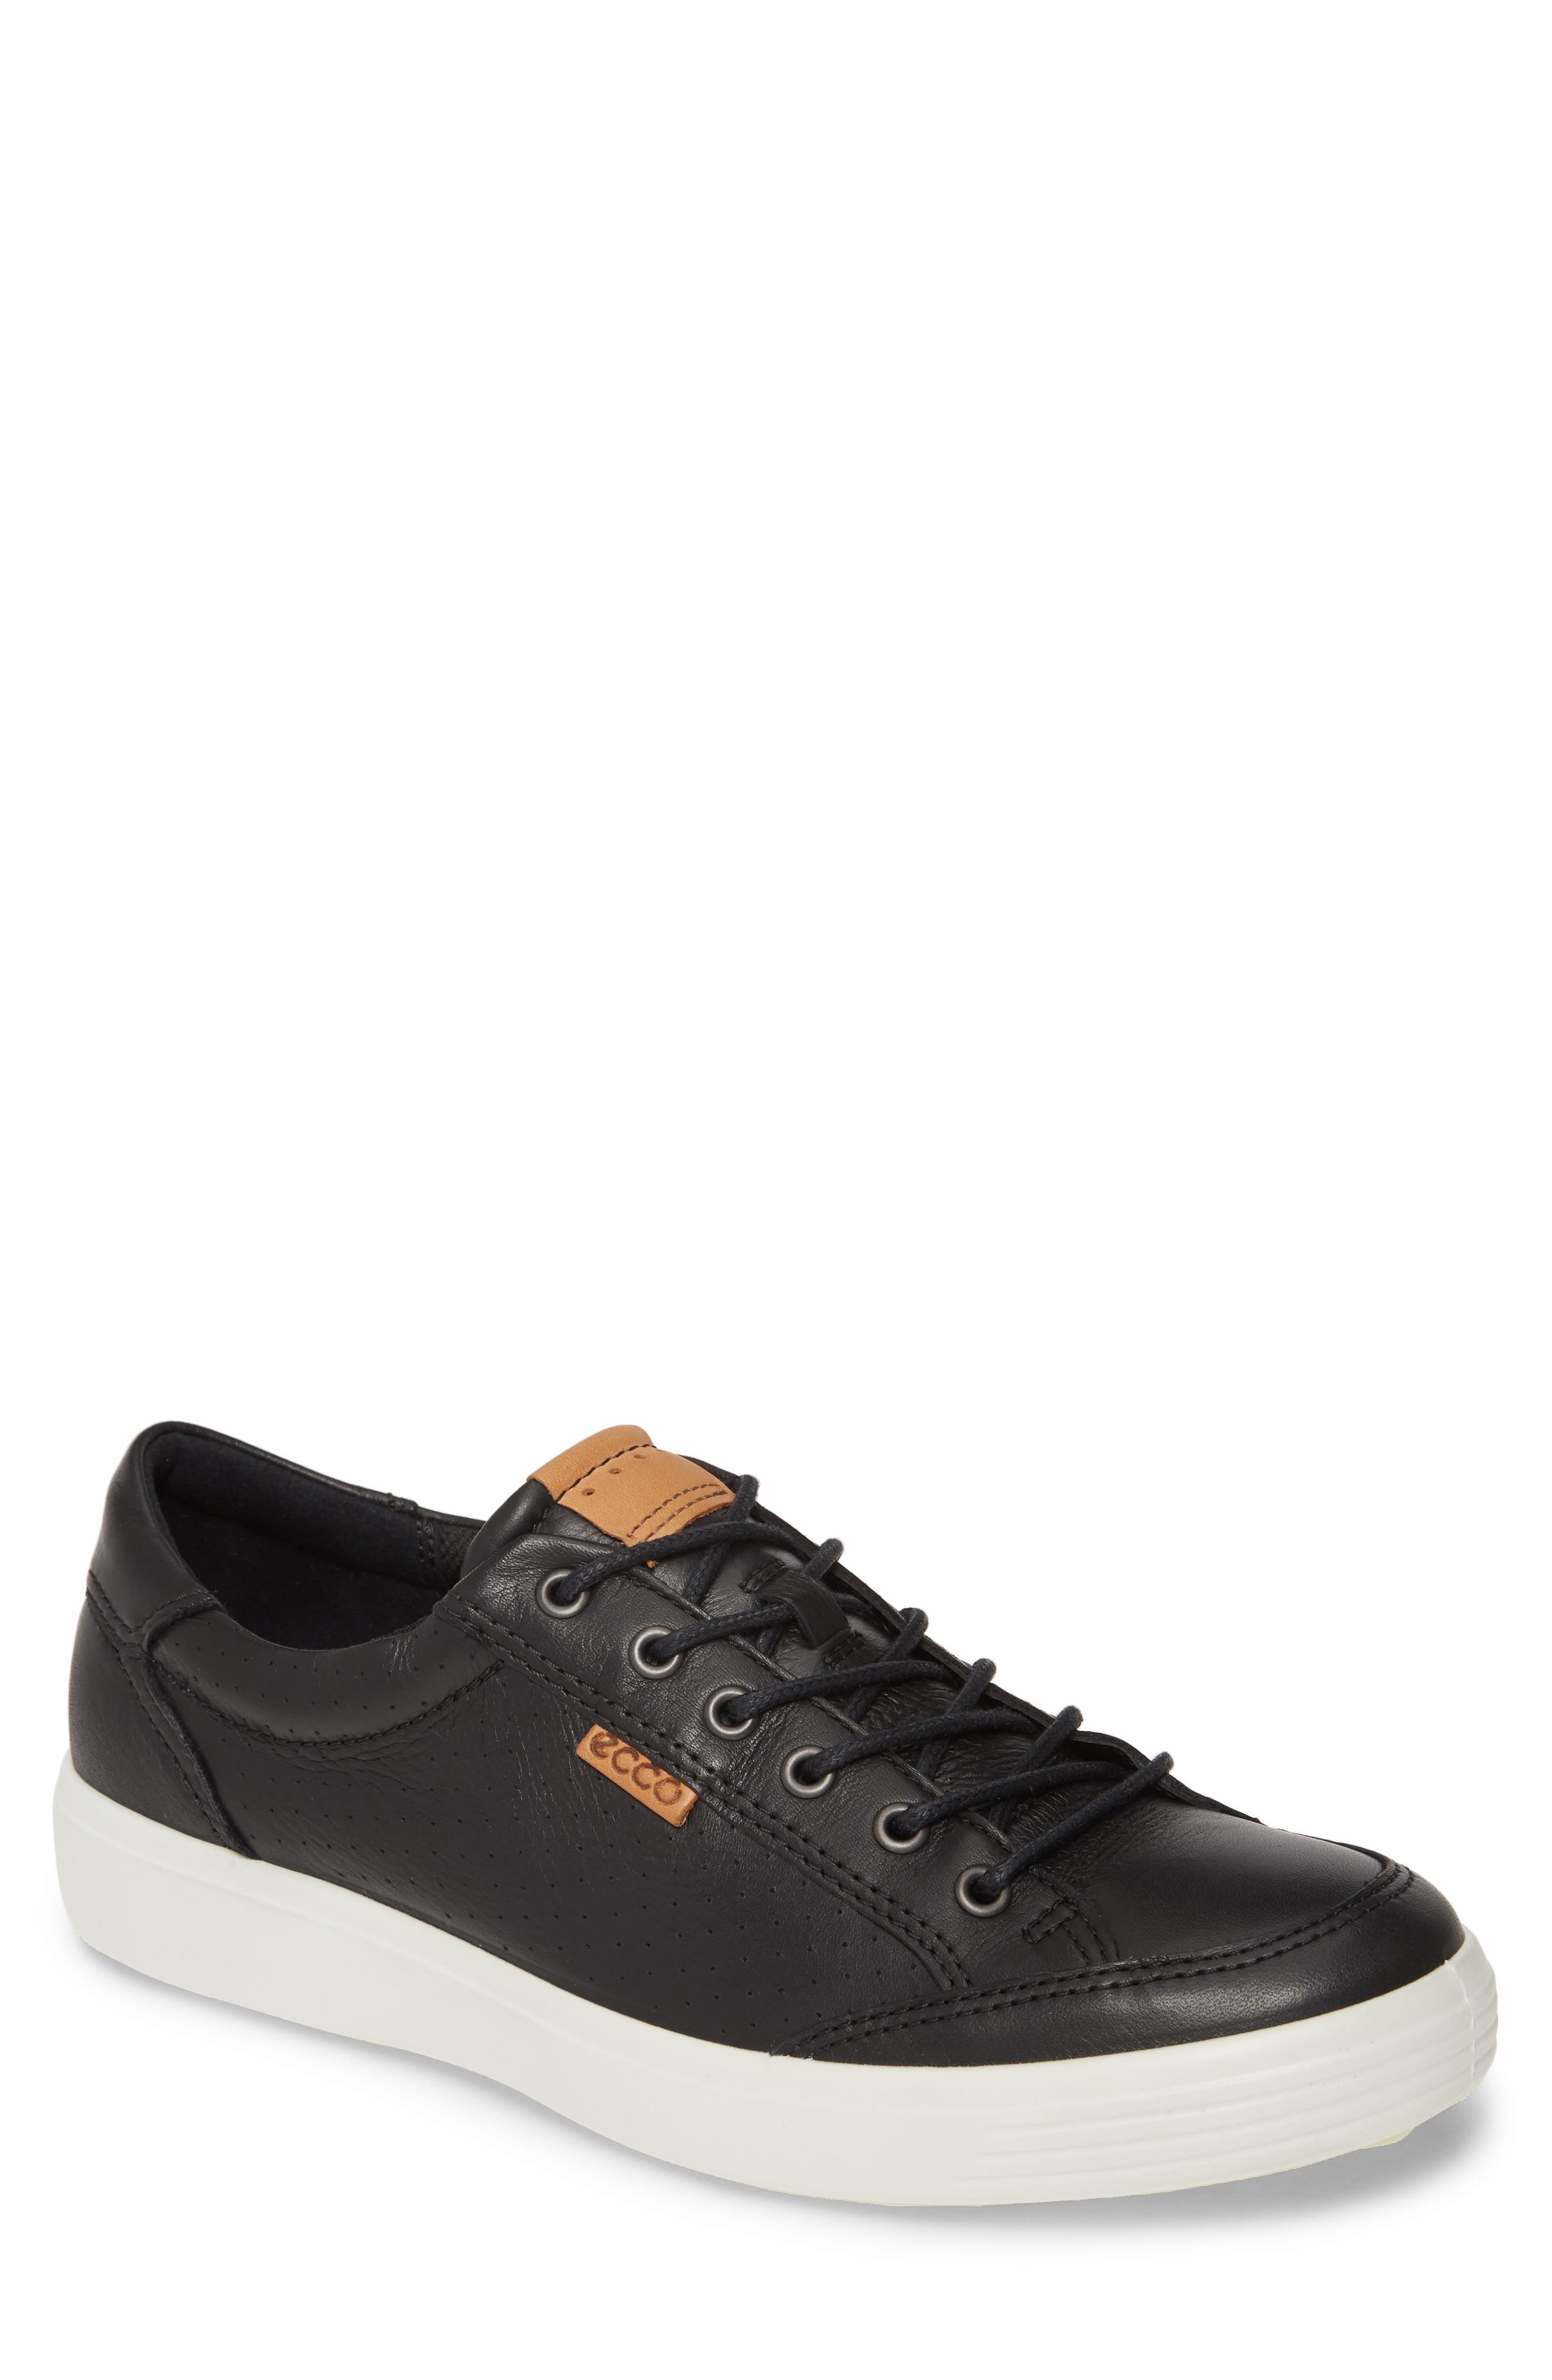 UPC 825840084641 product image for Men's Ecco Soft 7 Light Sneaker, Size 13-13.5US / 47EU - Black | upcitemdb.com